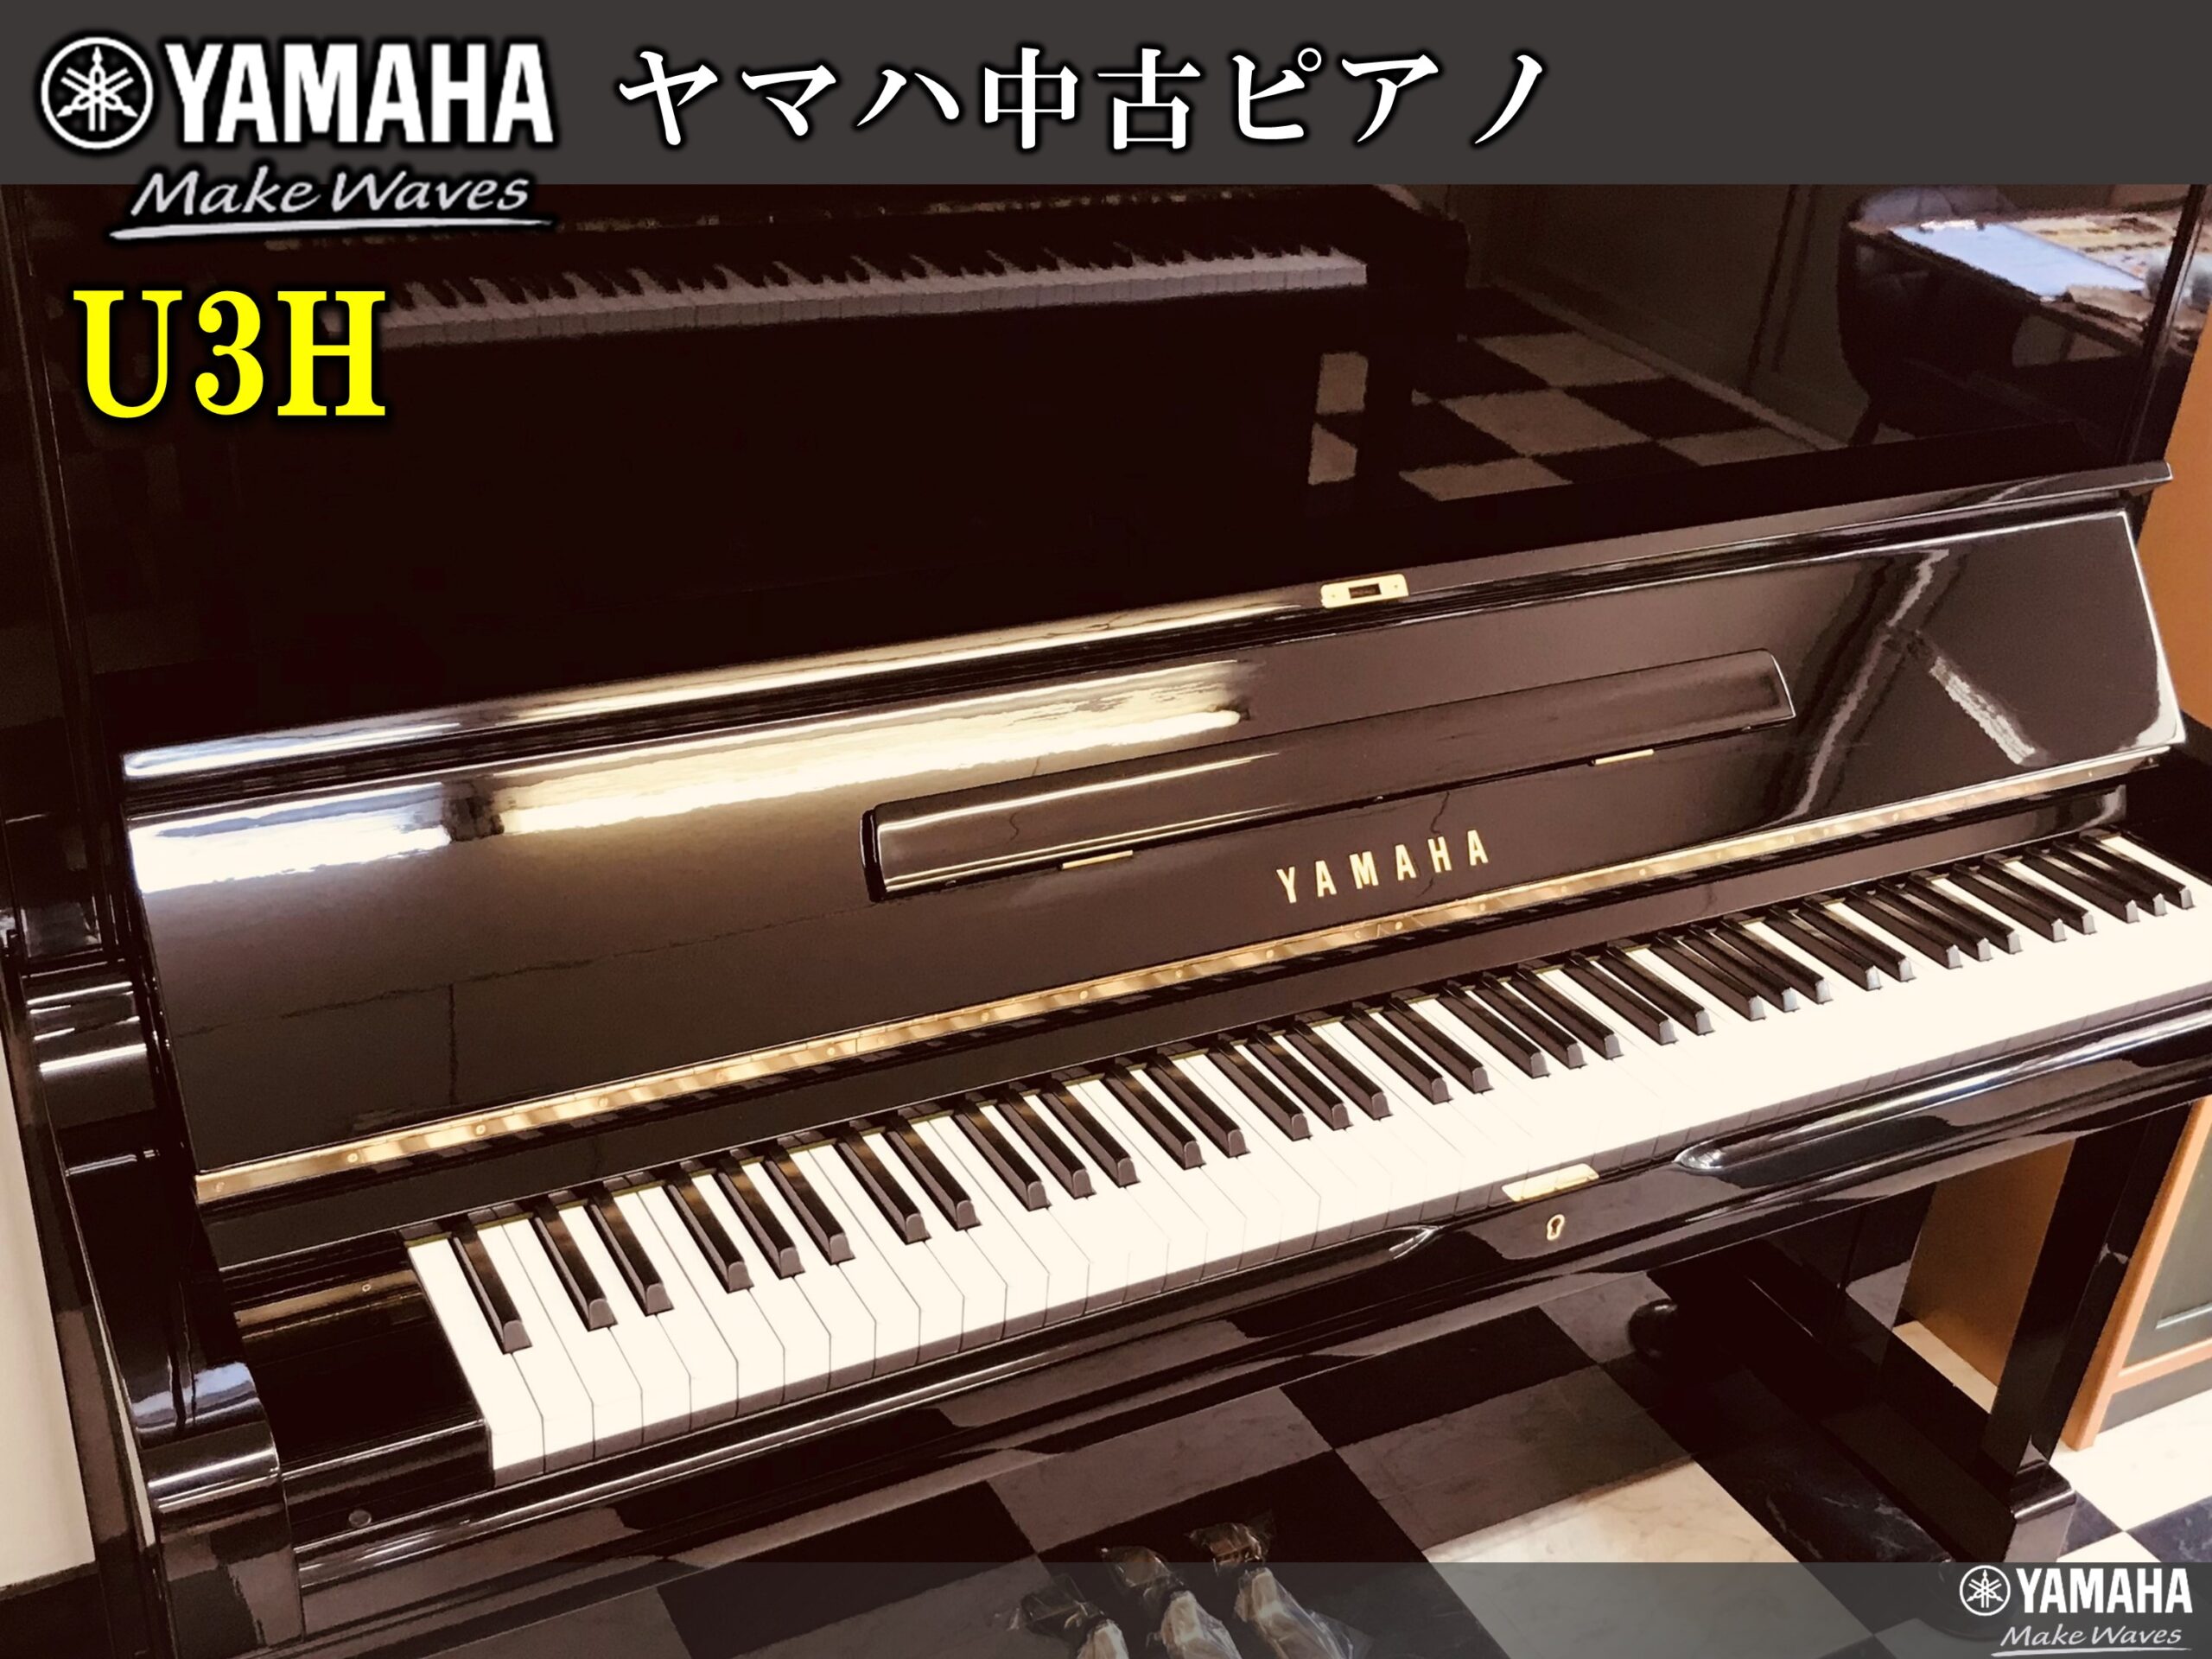 YAMAHA製［U3H］アップライトピアノ - 楽器/器材